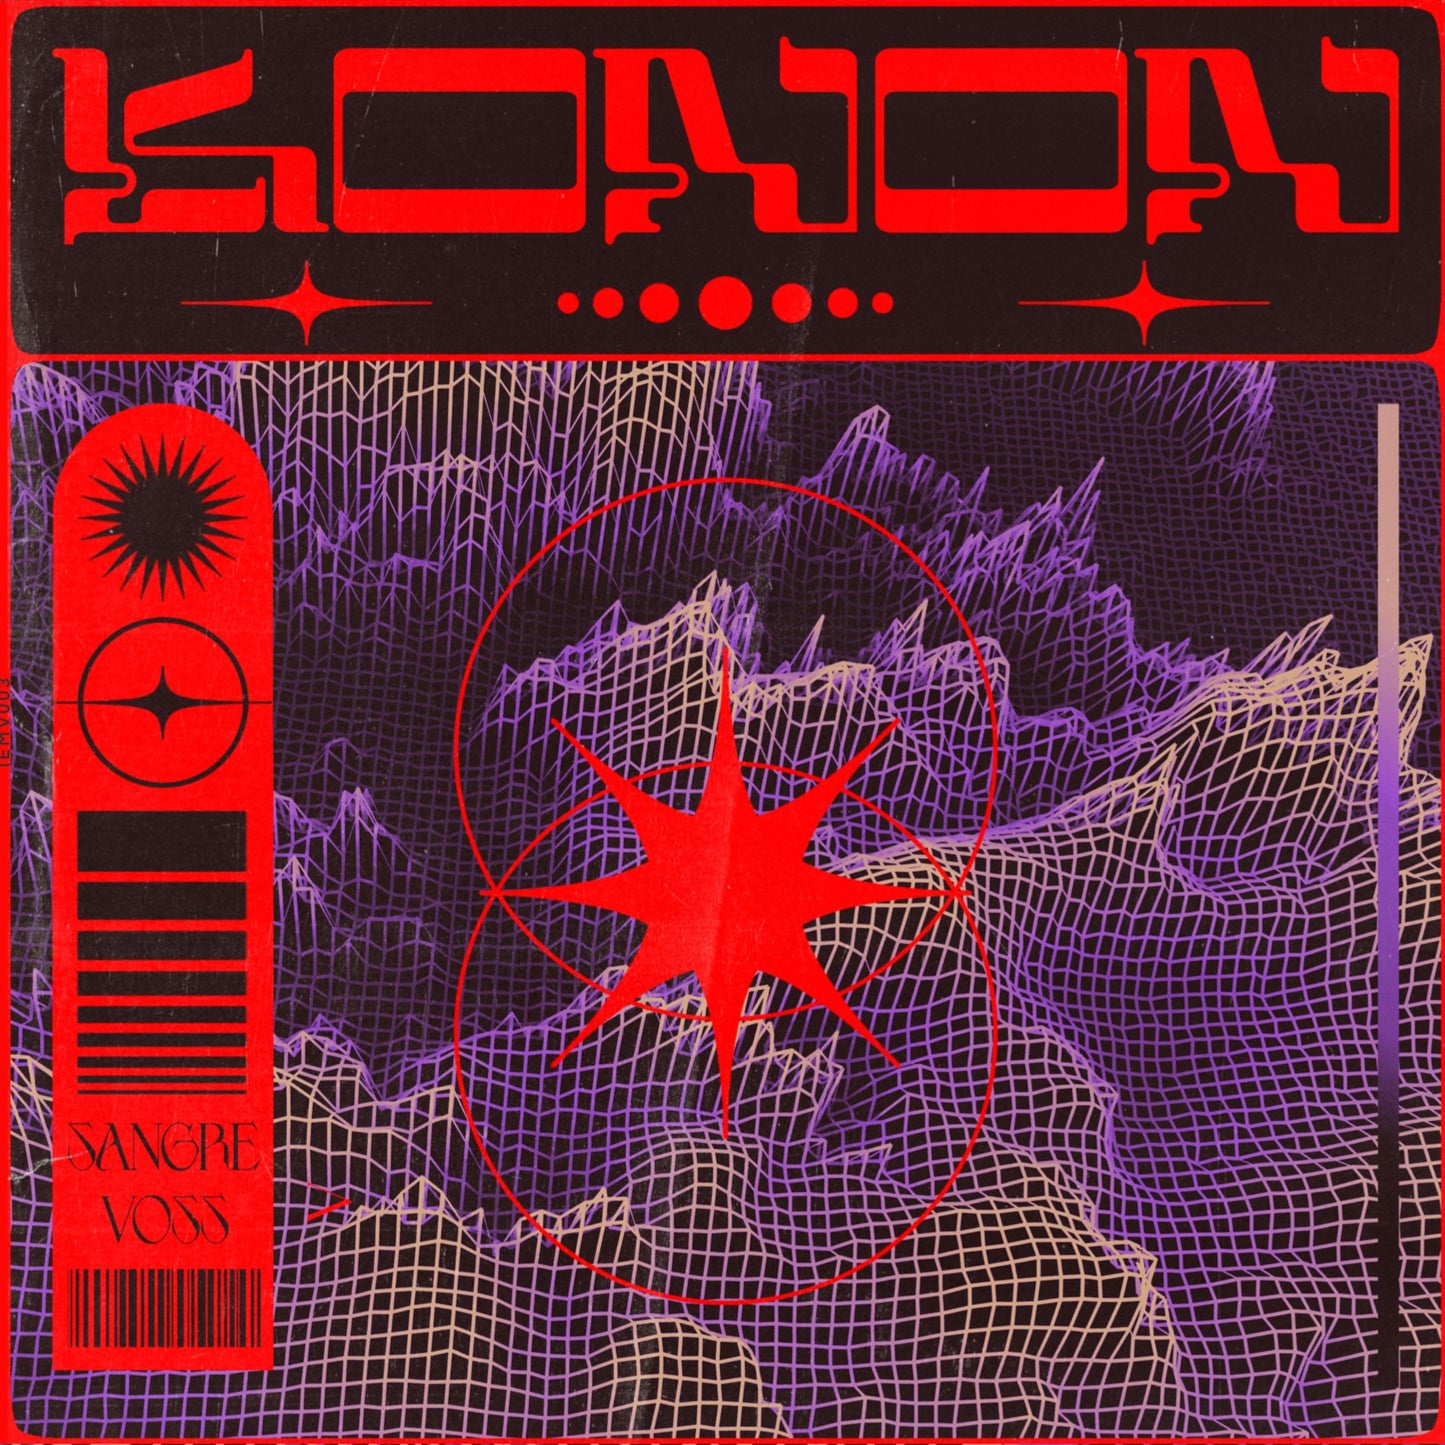 Sangre Voss - Konon [IEMV003]